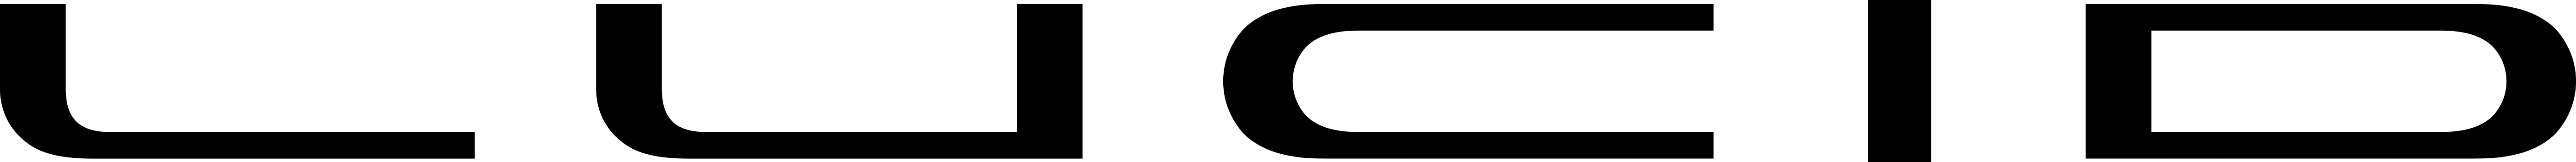 Lucid logo in black font on white background